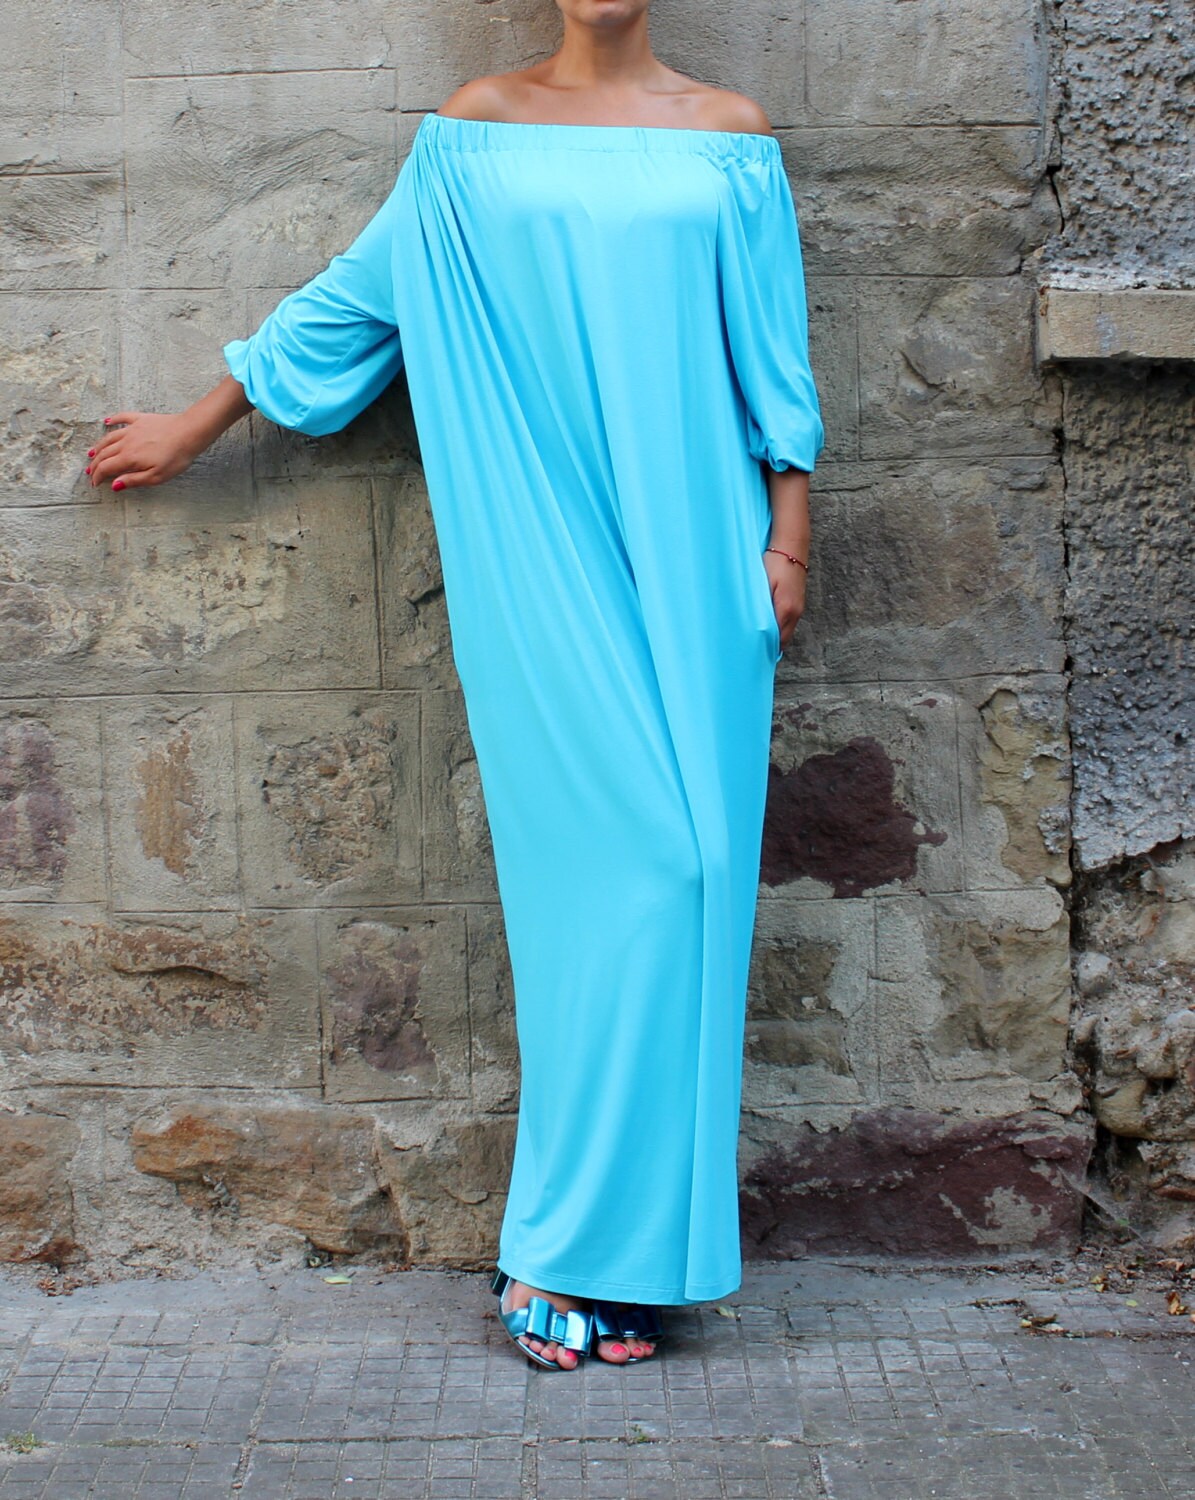 Turquoise Maxi Dress Caftan Off shoulders dress Abaya | Etsy